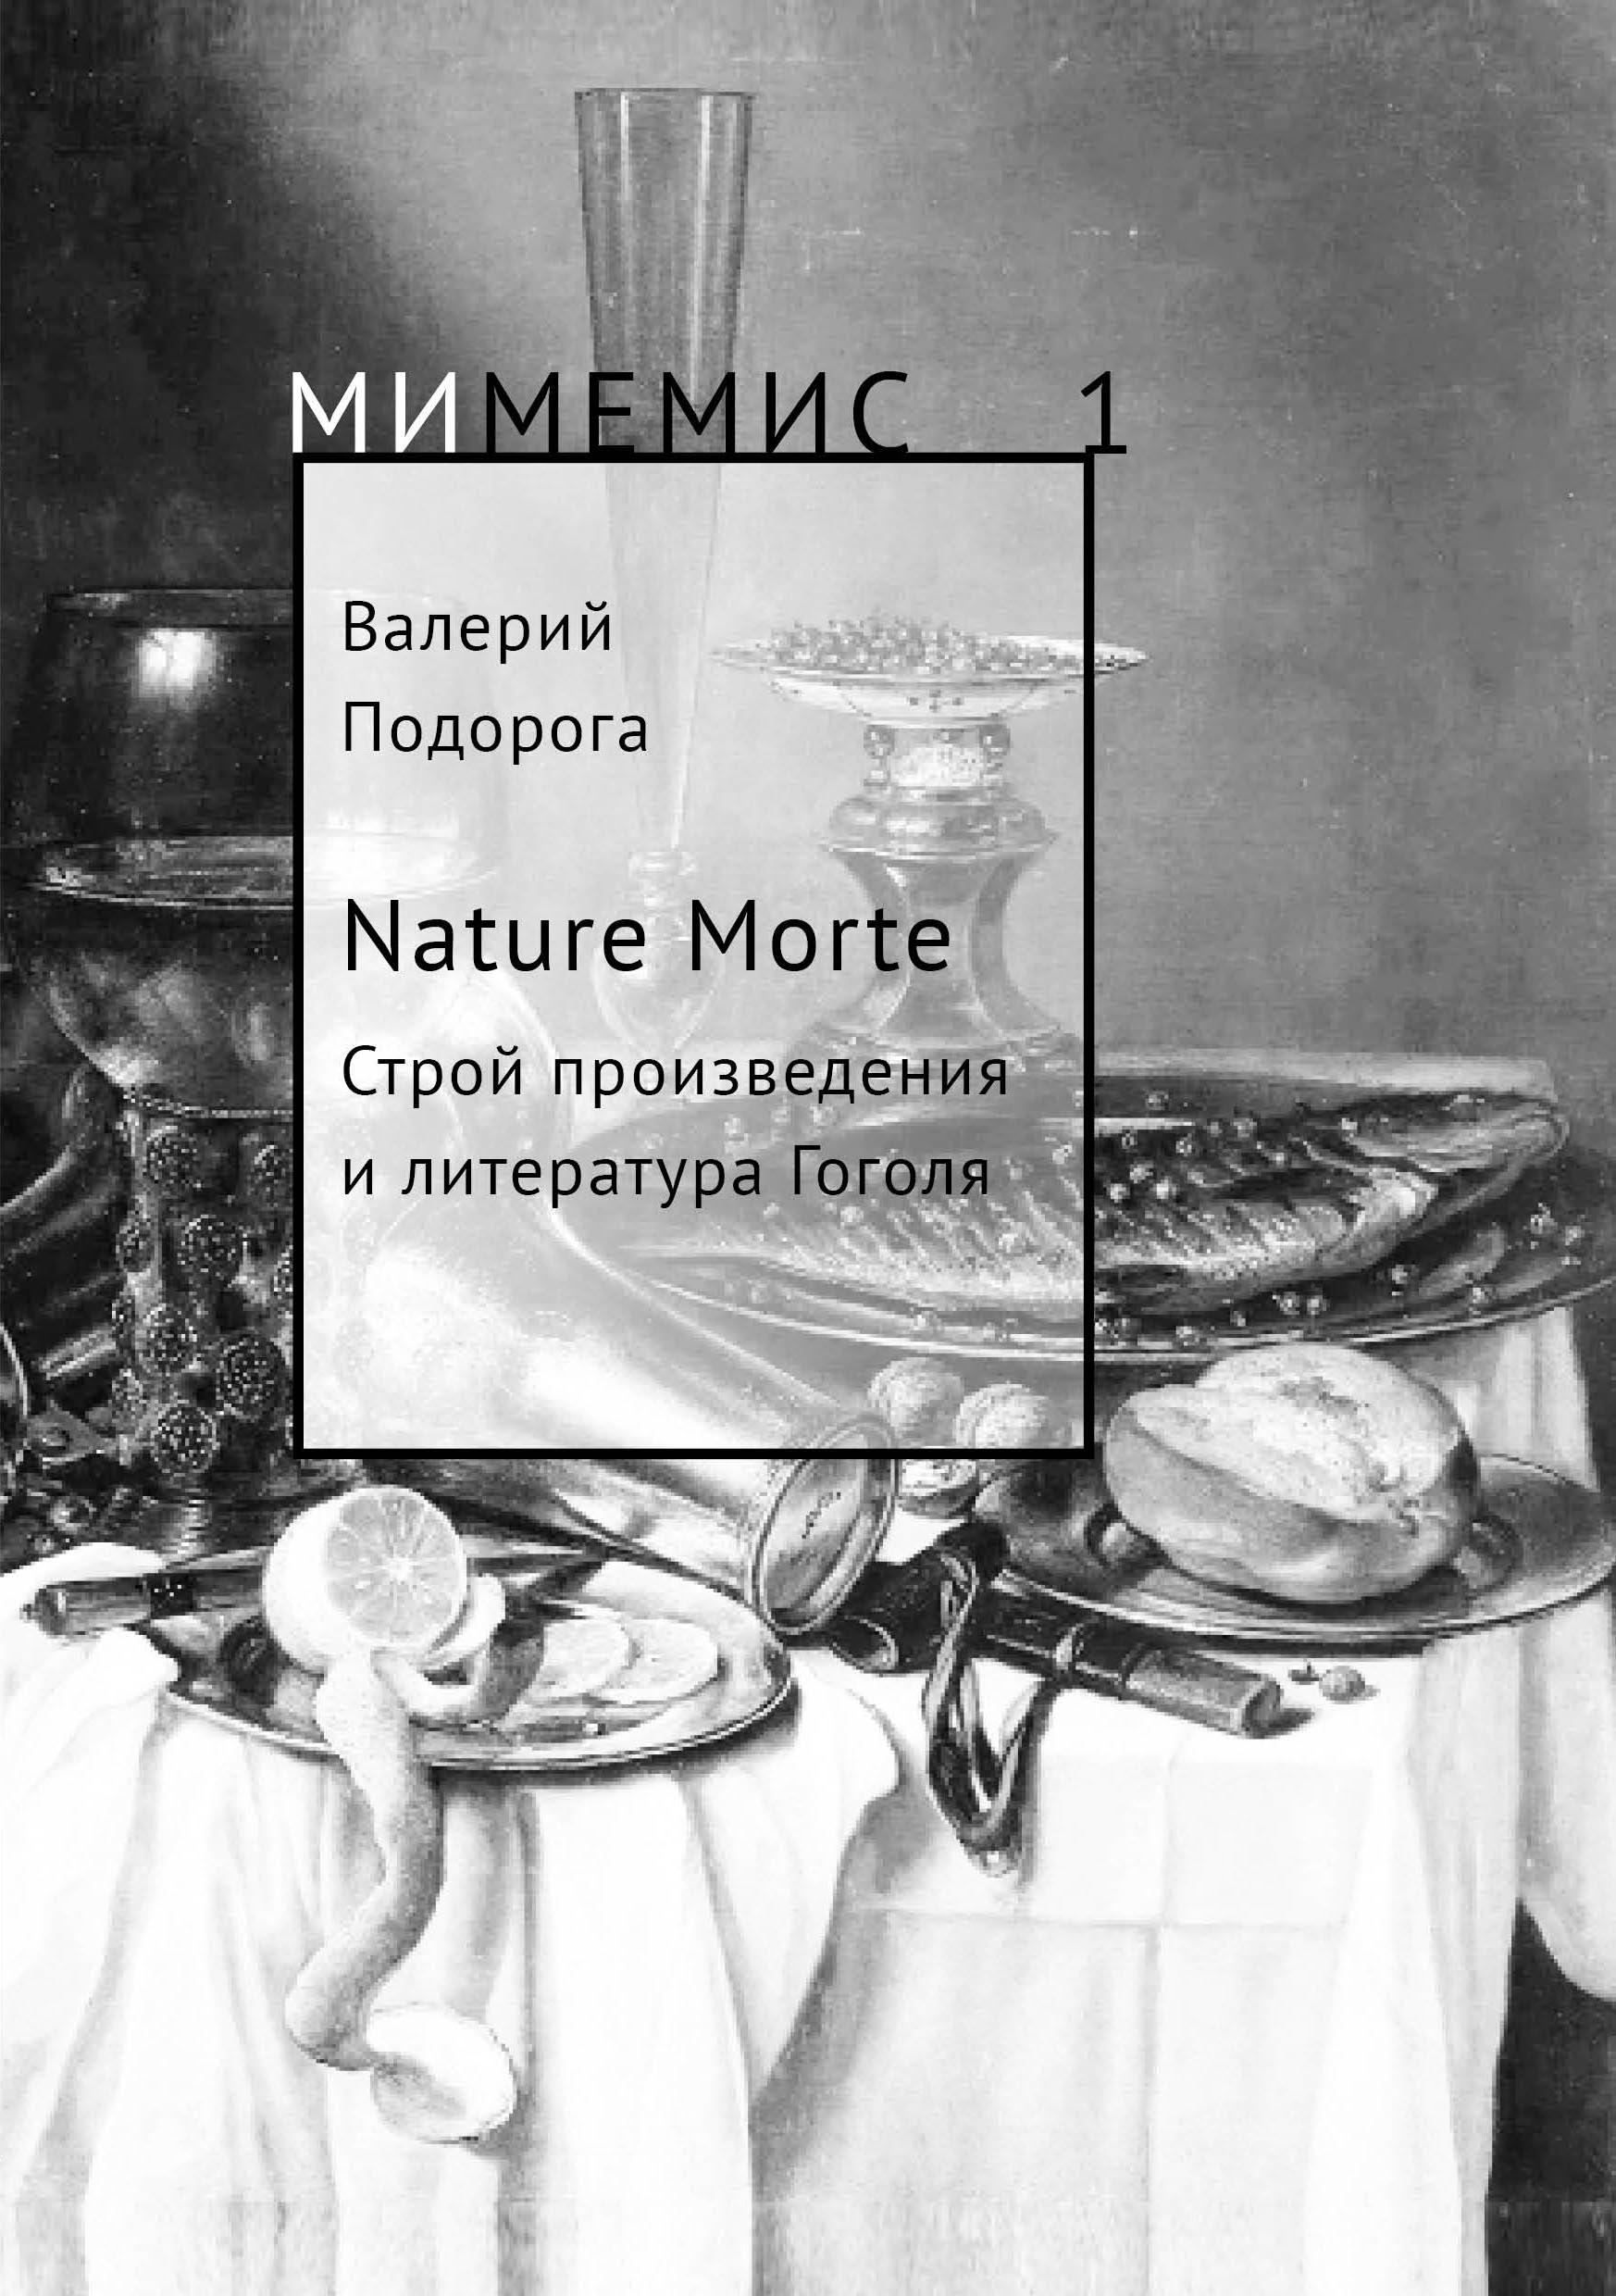 Nature Morte. Строй произведения и литература Н. Гоголя. Подорога В. А.